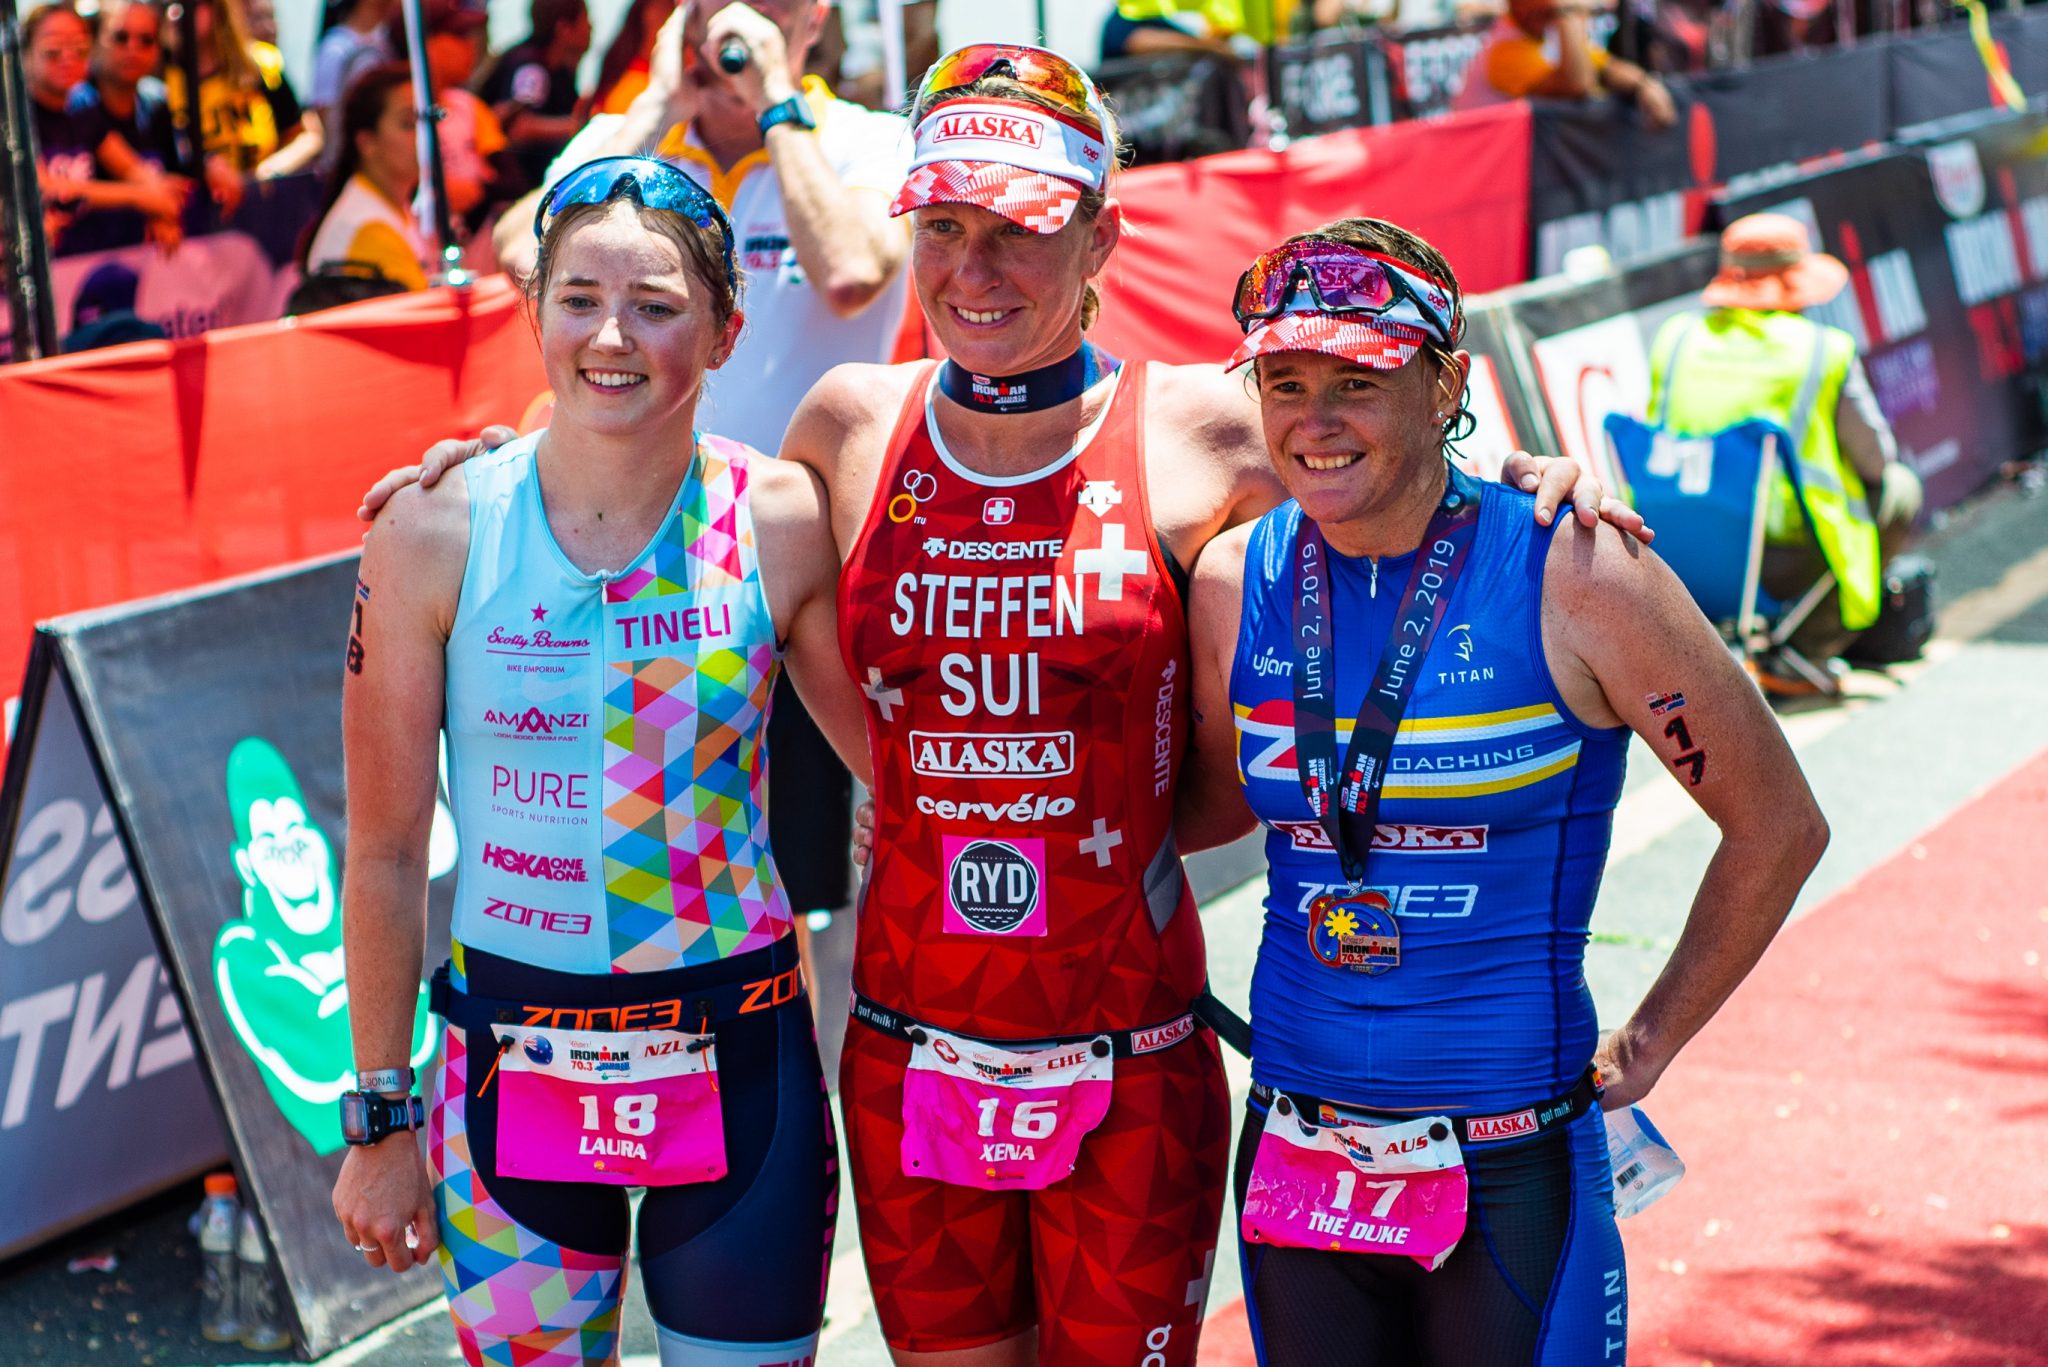 Century Tuna Ironman 70.3 women's top 3 finishers Laura Wood, Caroline Steffen, and Dimity Lee-Duke